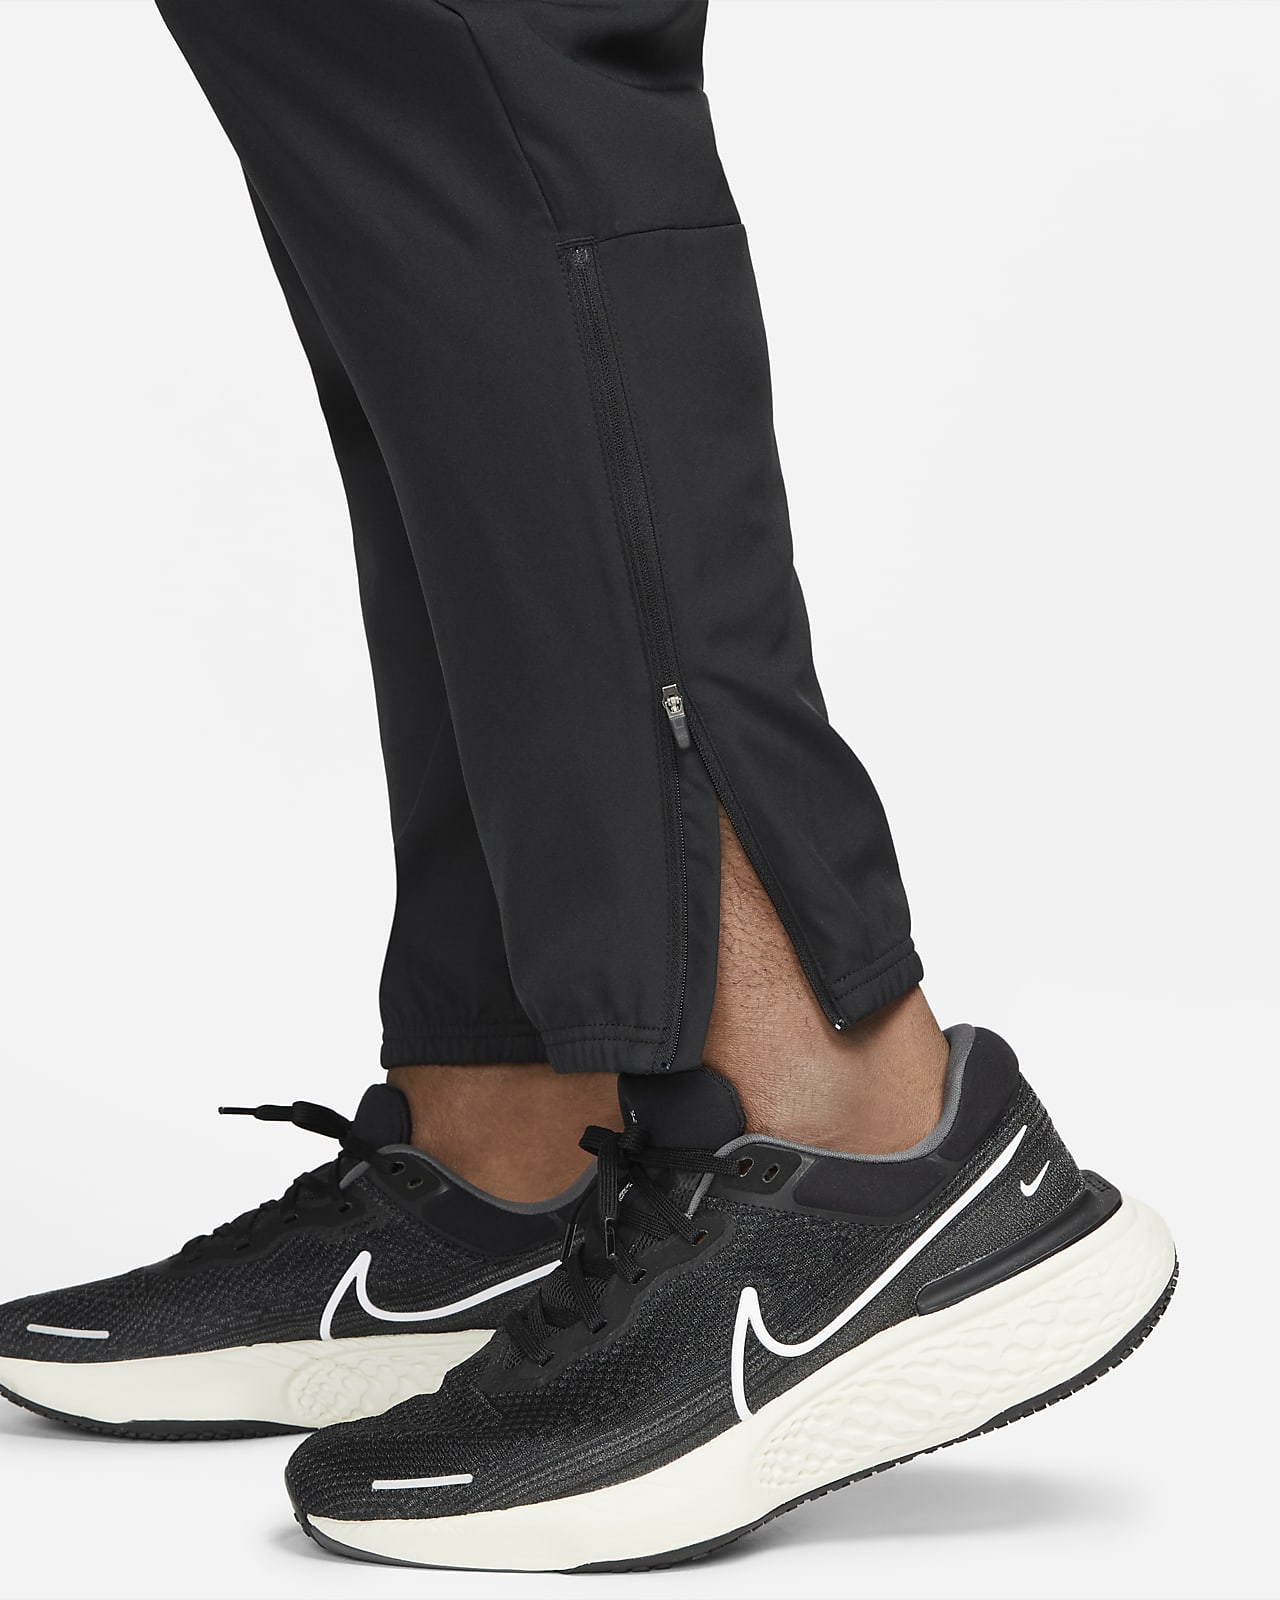 Nike Dri-FIT Challenger Men's Woven Running Pants, 53% OFF